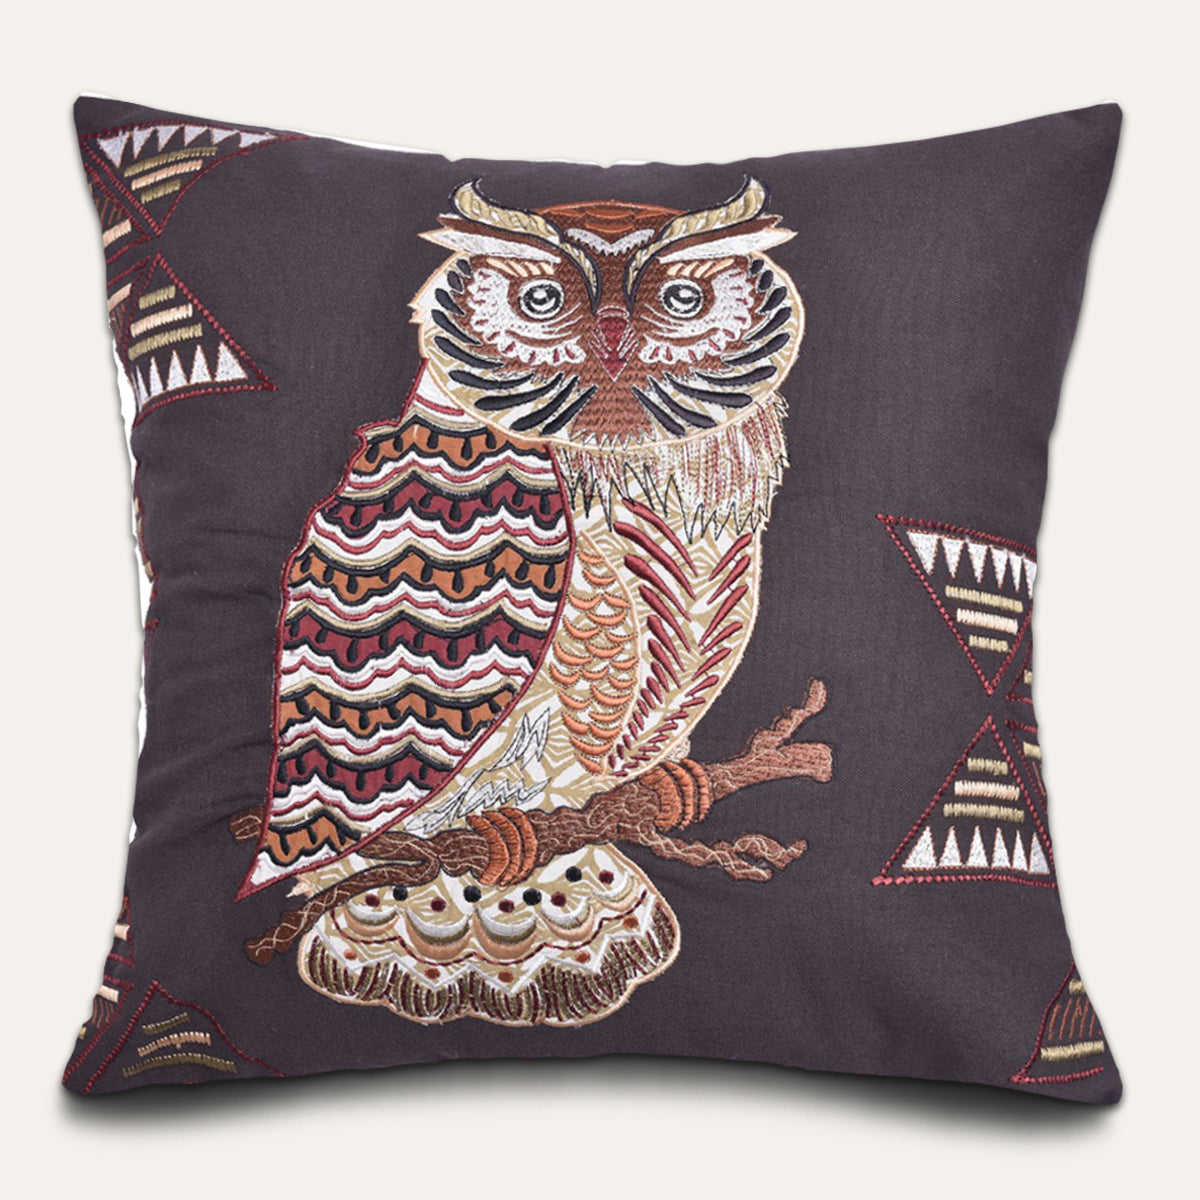 Owl Printed Design Throw Pillow Covers - Decozen